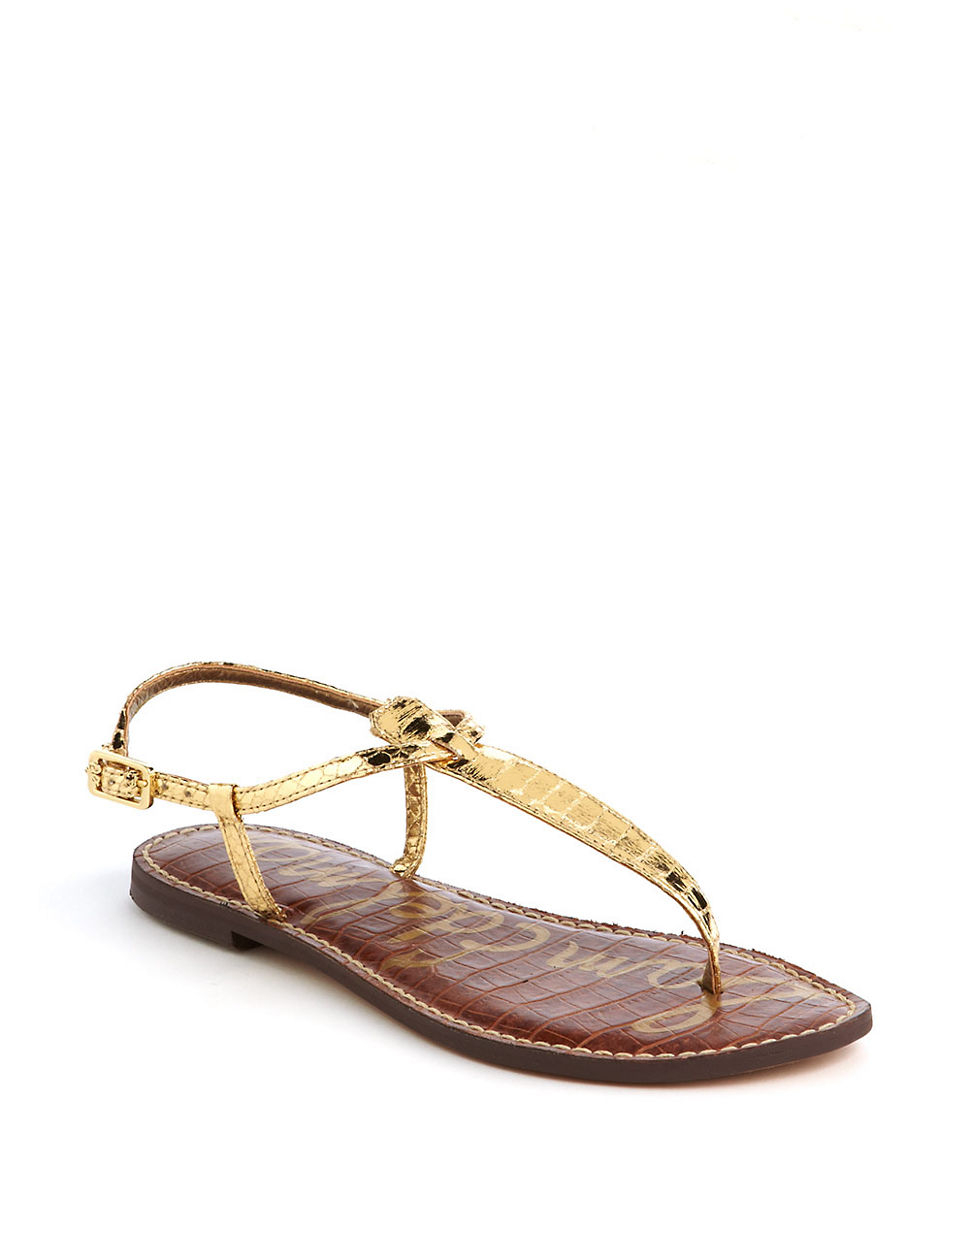 Sam edelman Gigi Thong Slide Sandals in Metallic (Gold) | Lyst